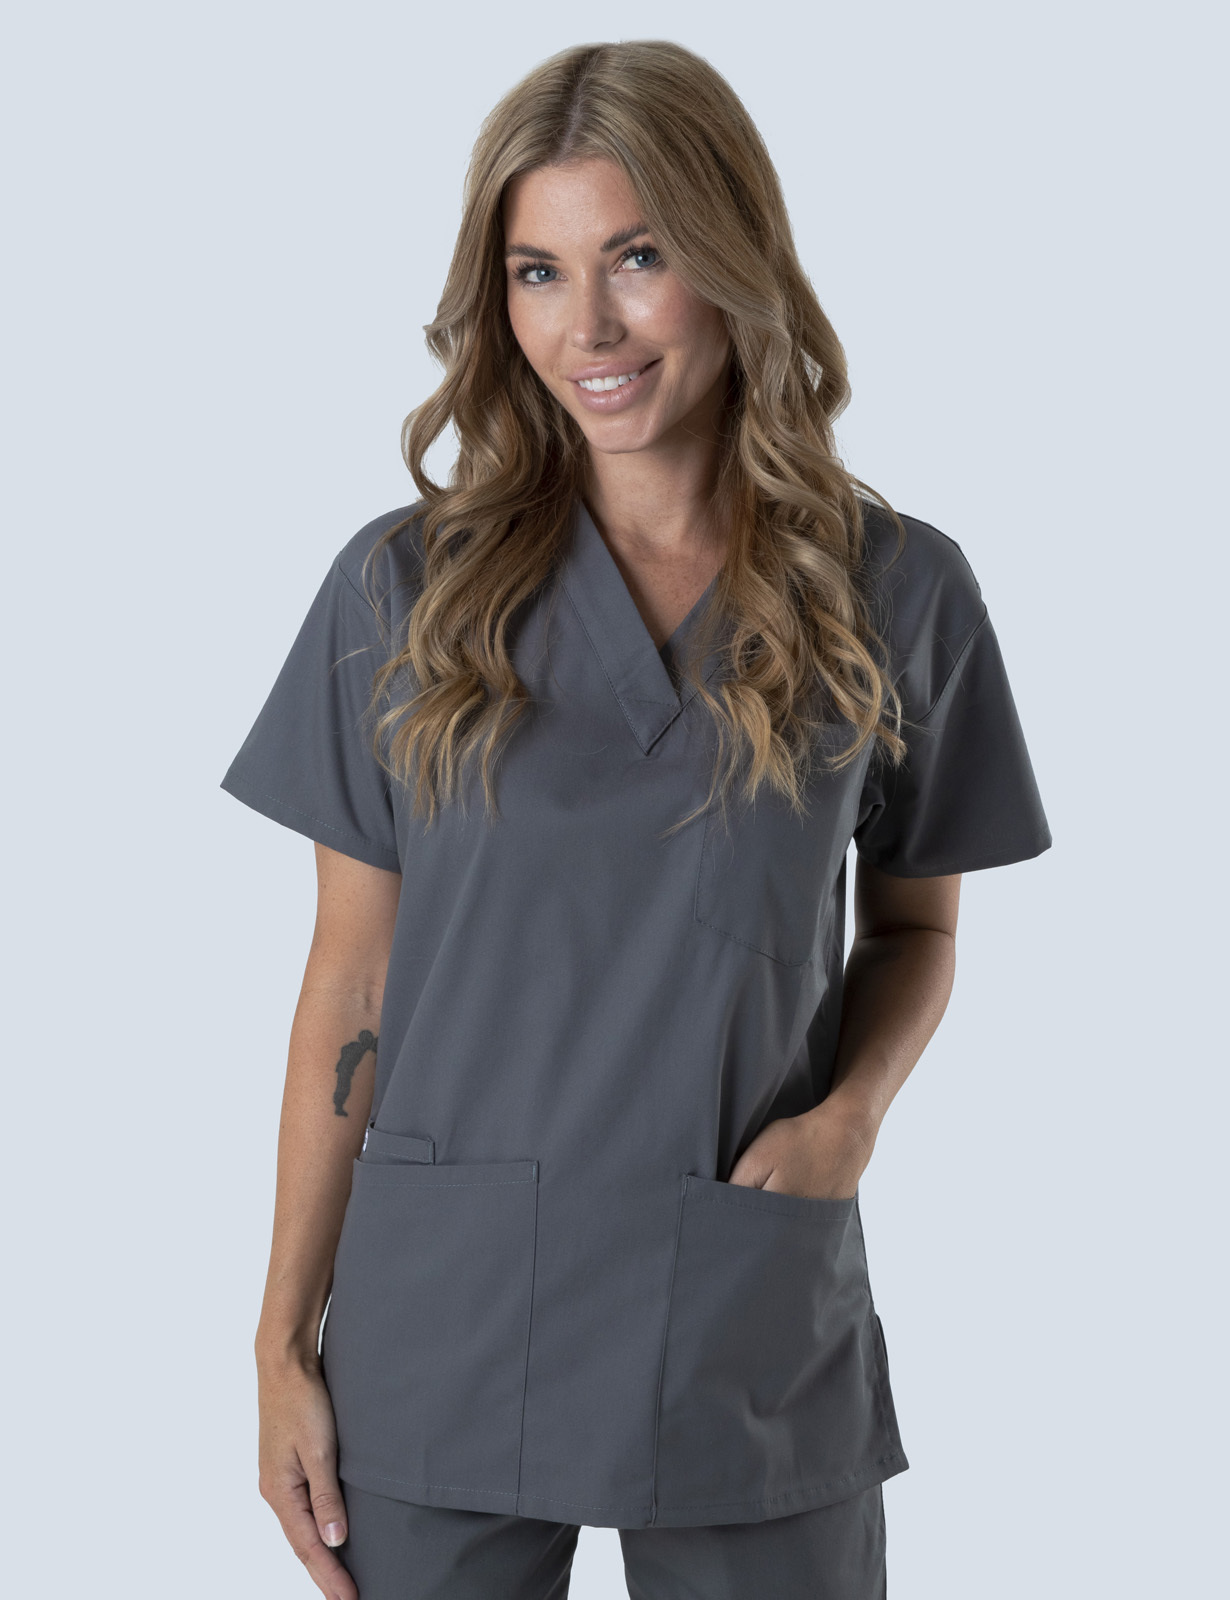 Maleny Hospital - RN Emergency (4 Pocket Scrub Top and Cargo Pants in Steel Grey incl Logos)